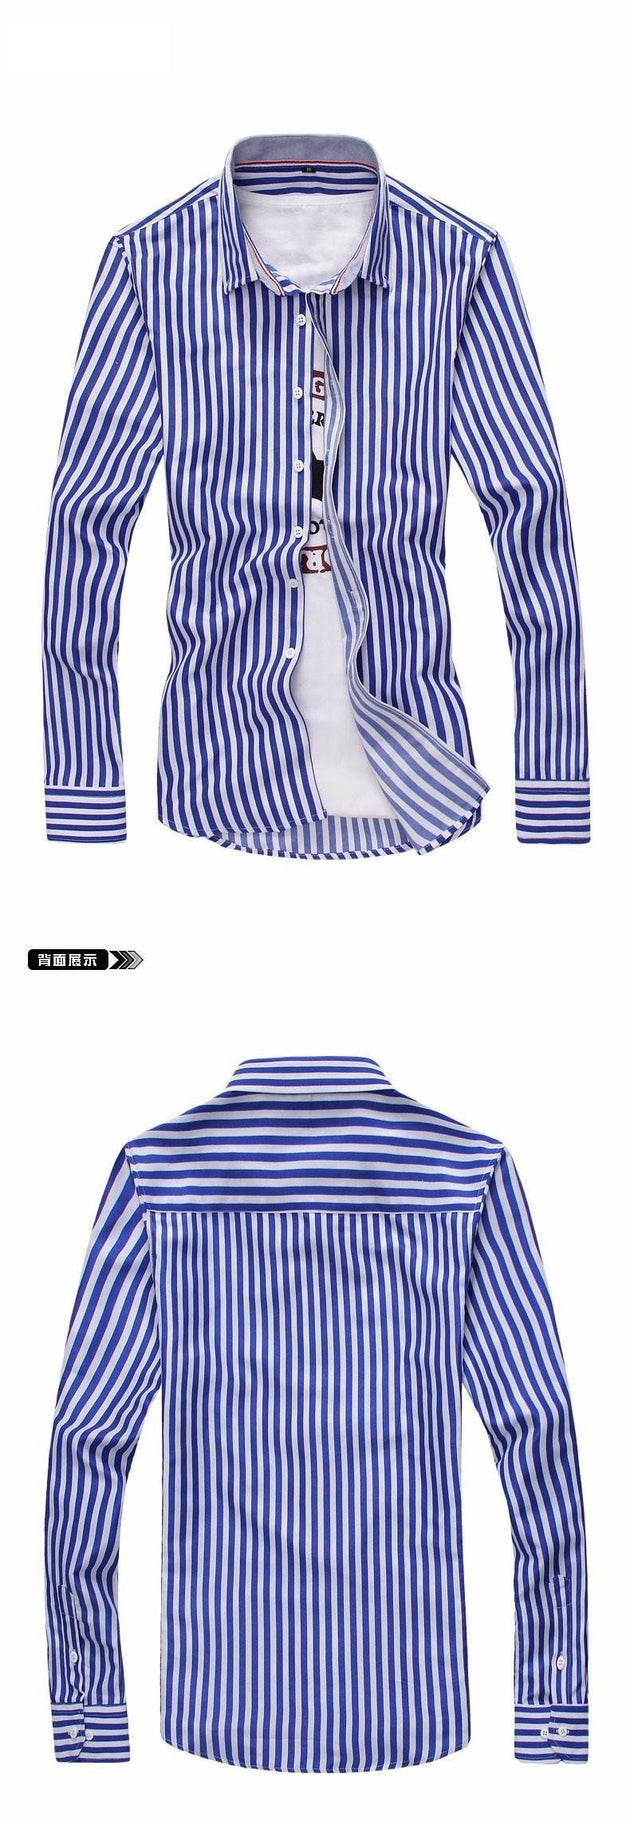 Men's Striped Dress Shirt - TrendSettingFashions 